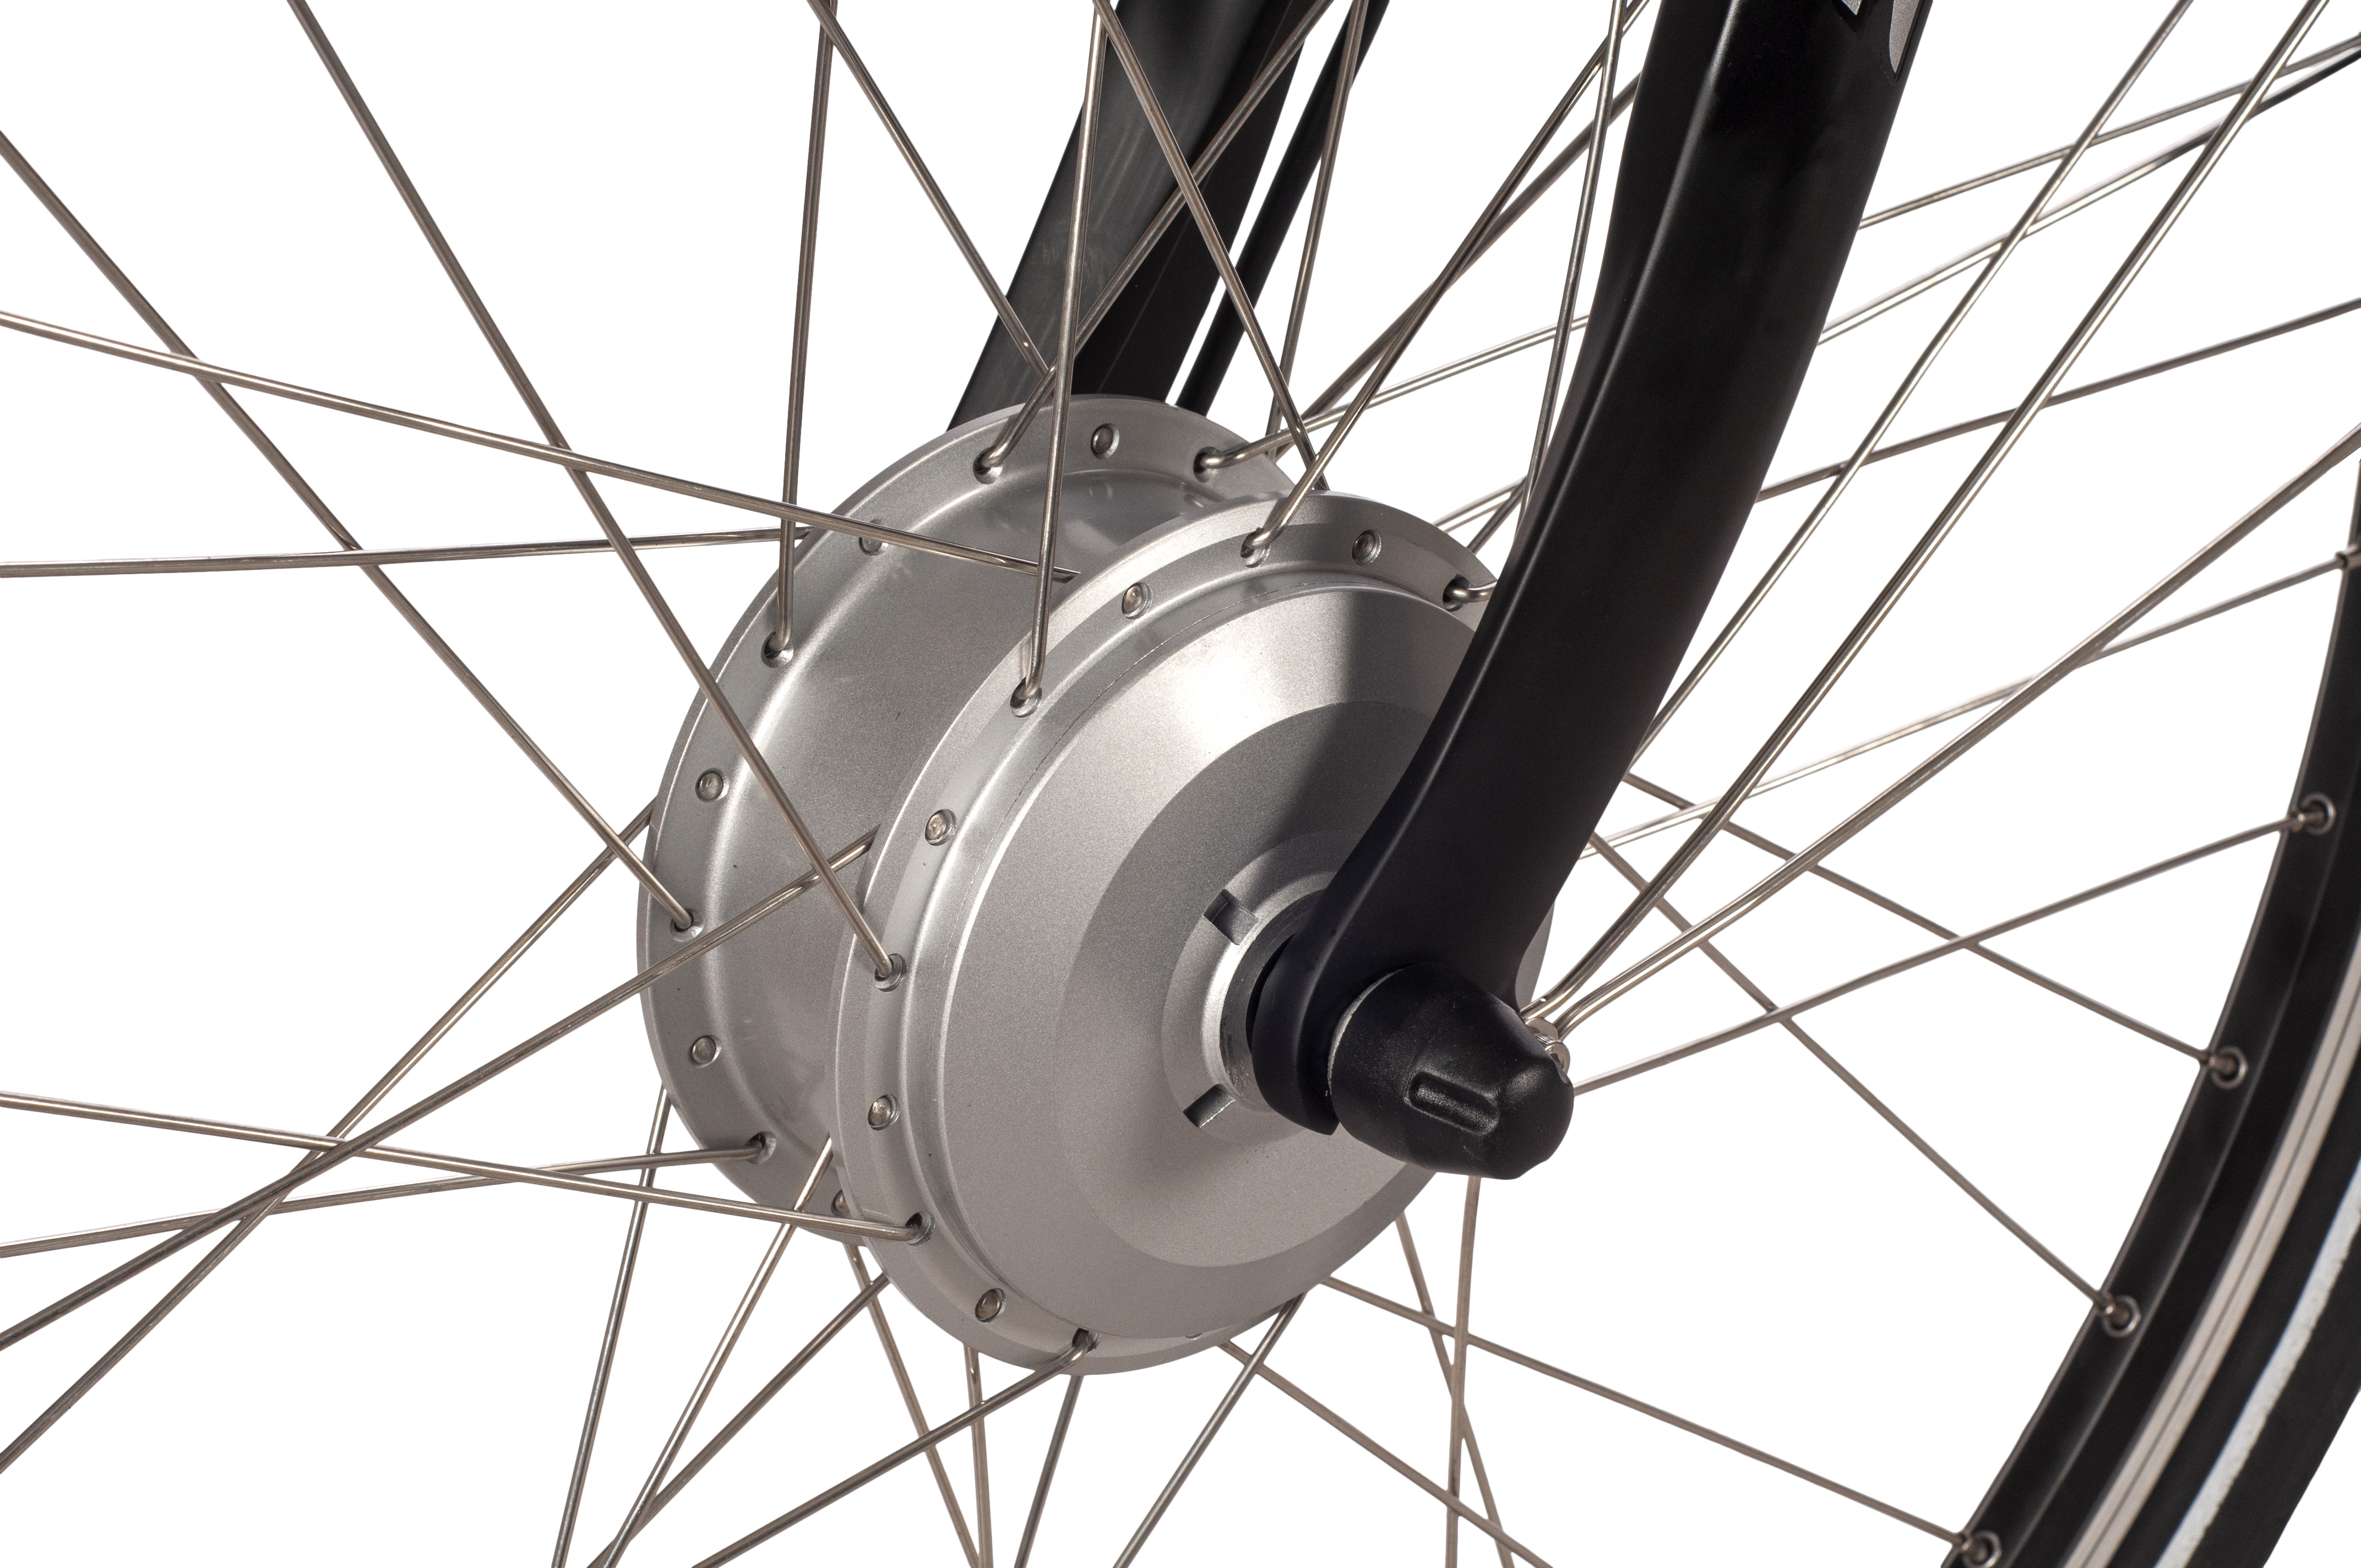 SAXONETTE Comfort Plus 4.0 E-Trekkingbike Federgabel Vorderradmotor 7 Gang 2. Wahl gebraucht Wave beere matt